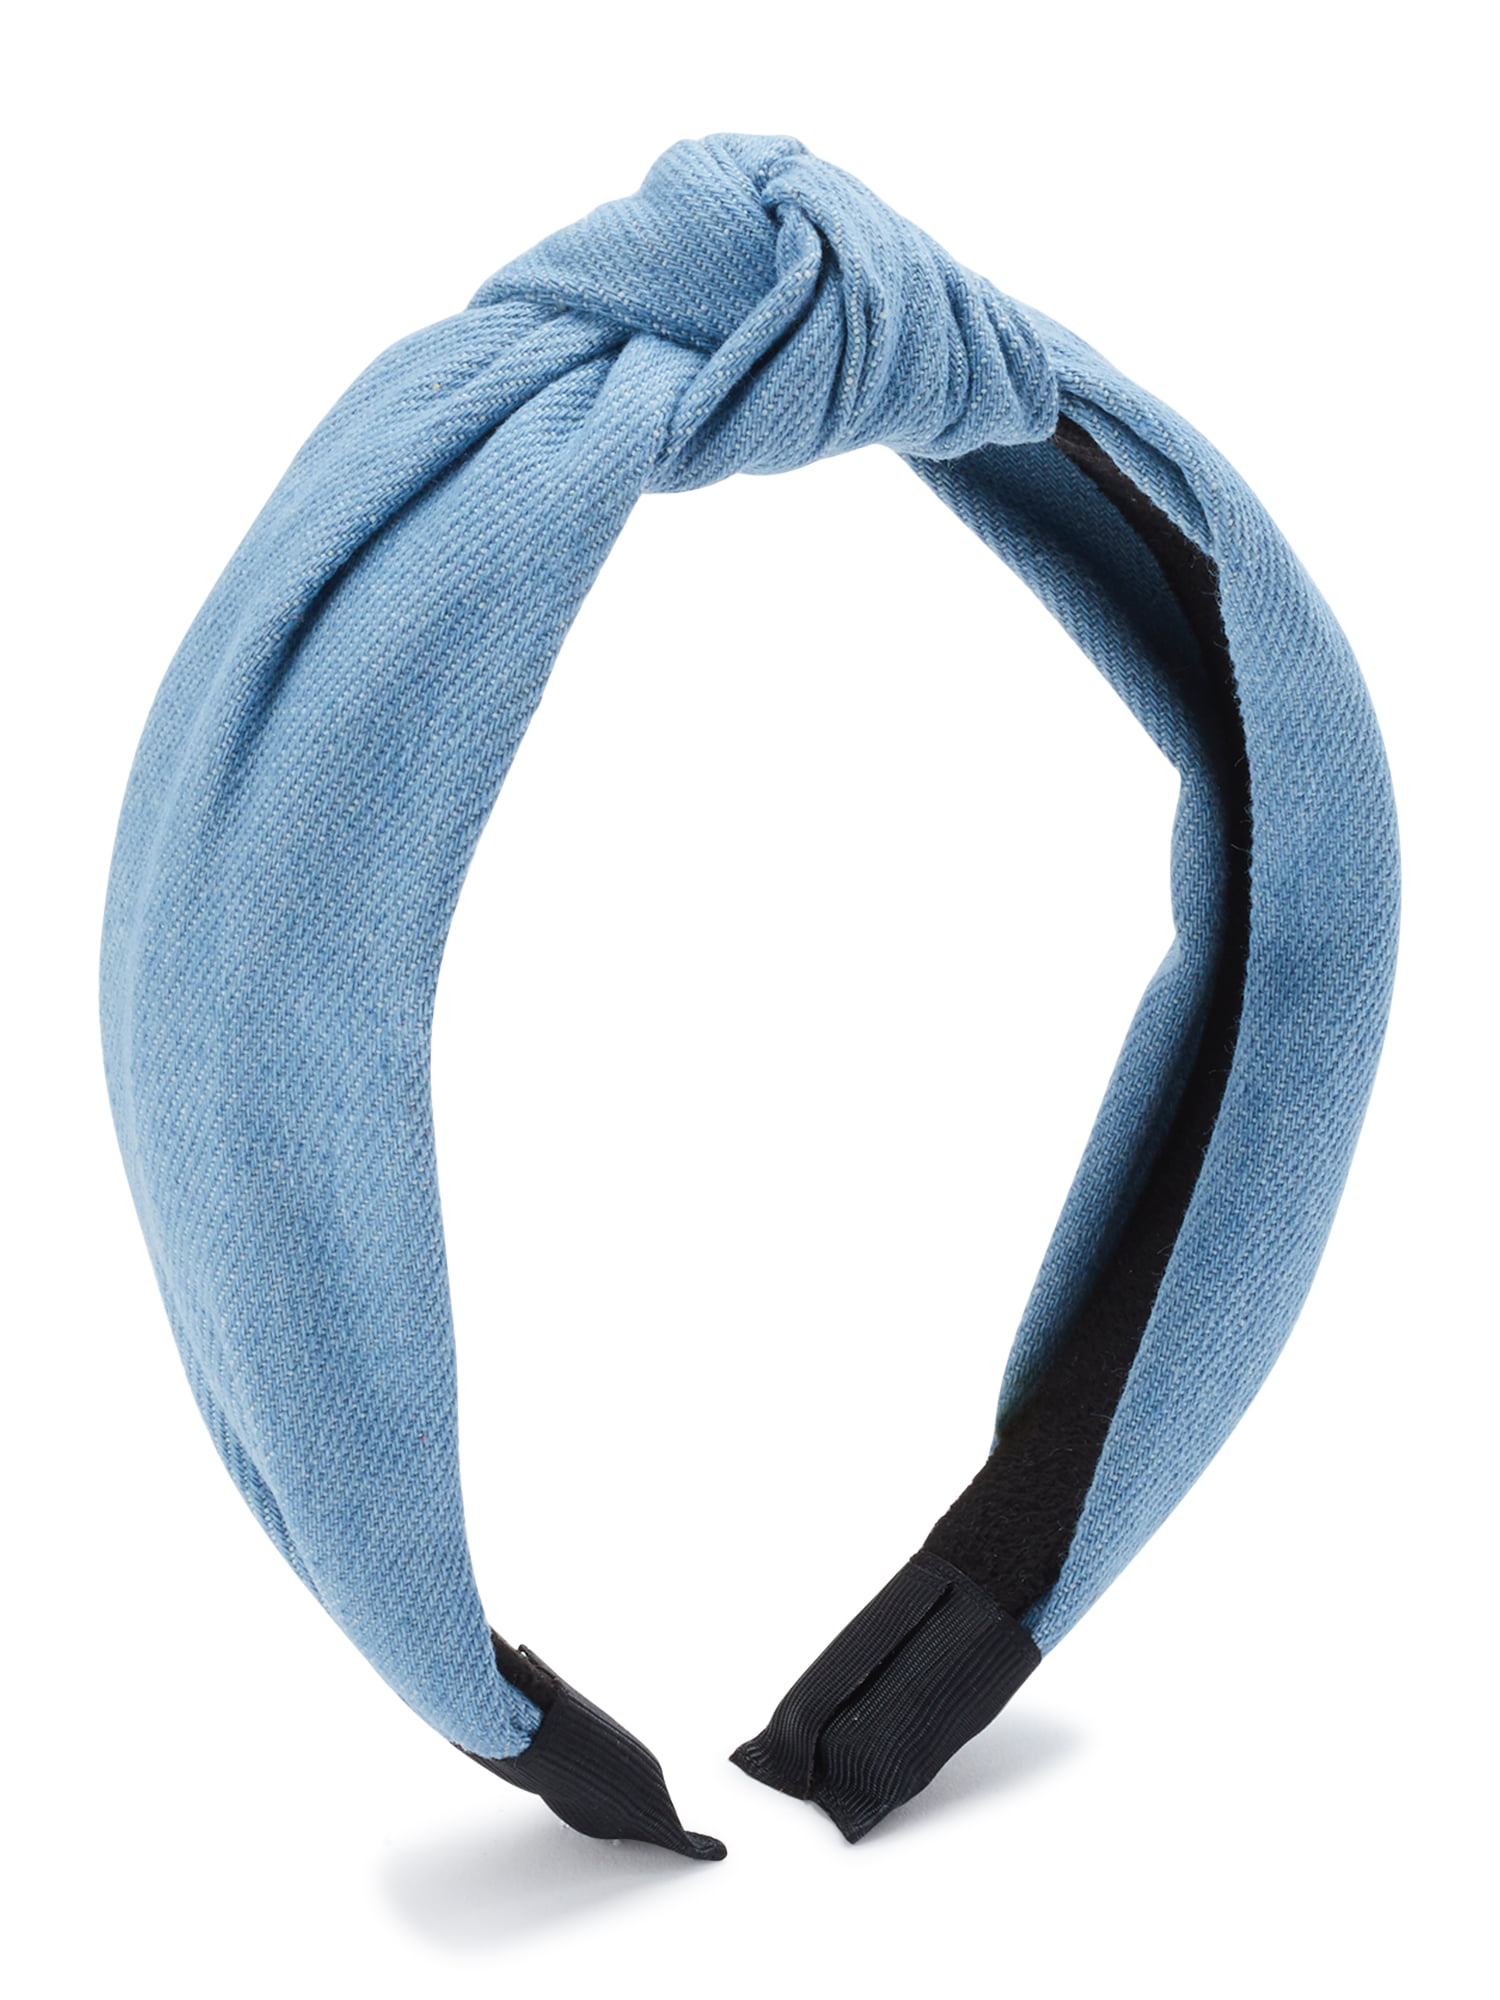 2 Colors Denim headband,Top knot headband,Cotton headband with top knot,Denim hair accessory,Dark blue knotted headband,Light blue headband